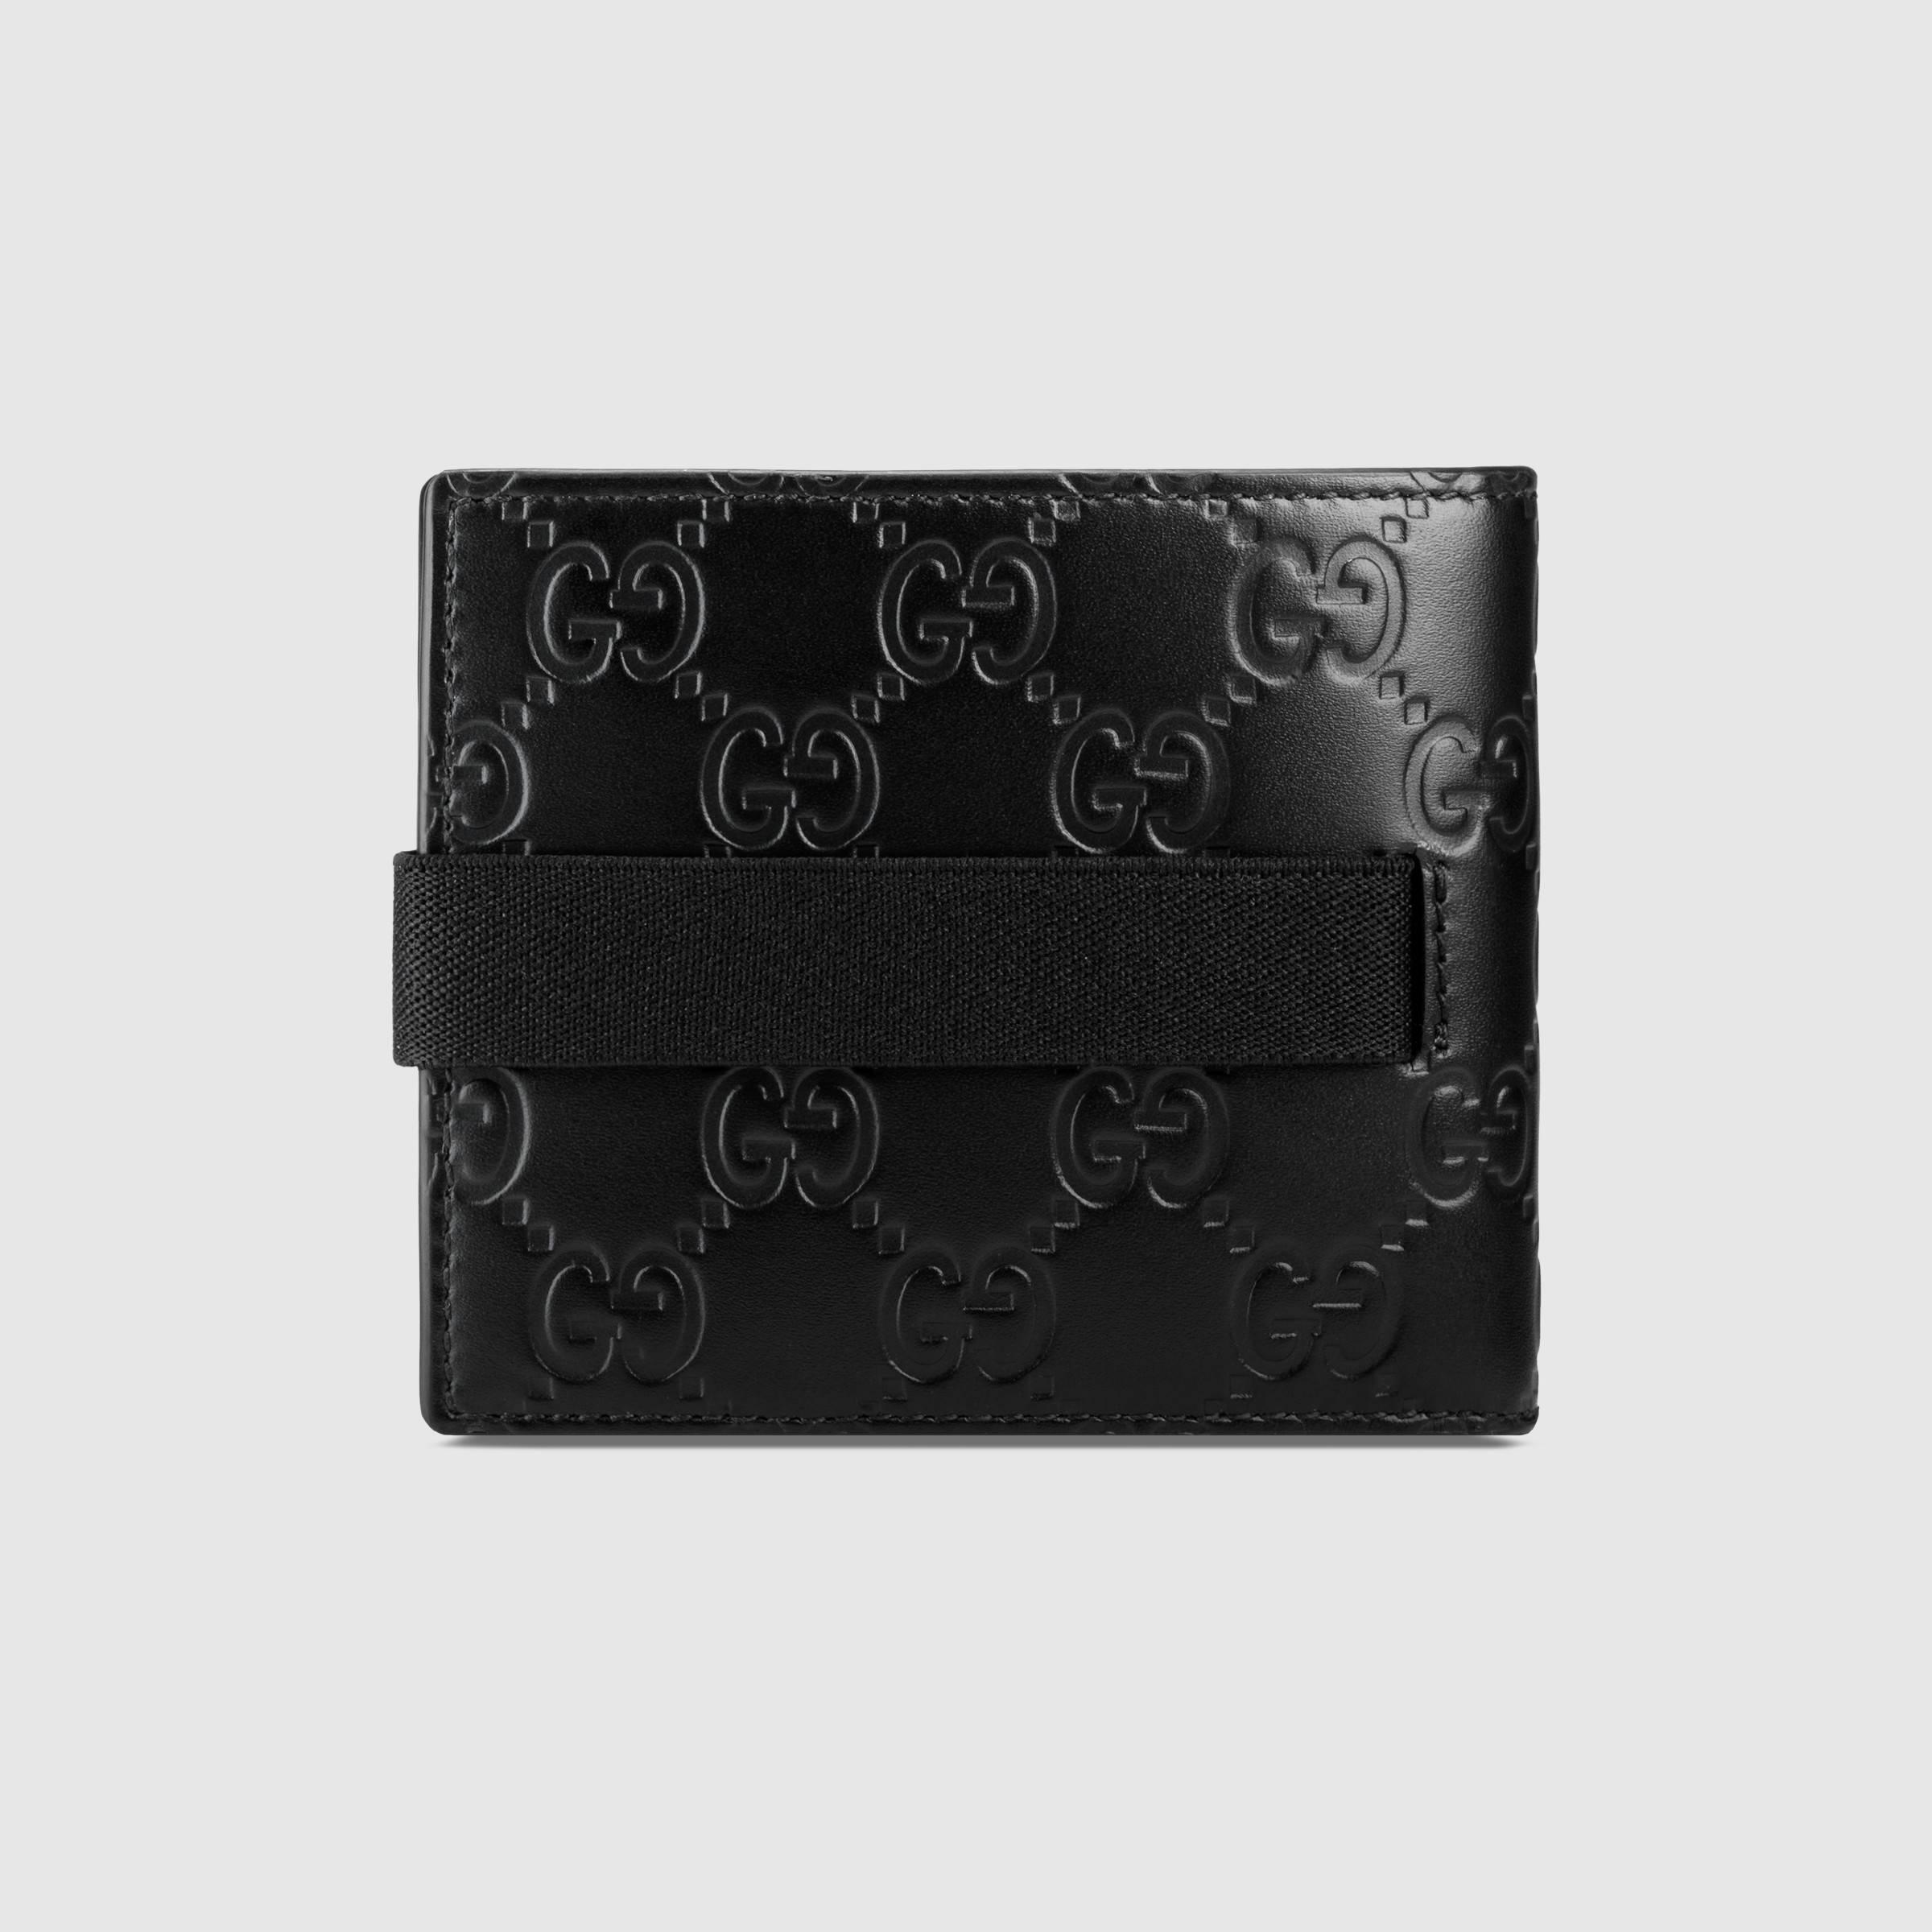 Lyst - Gucci Elastic Signature Wallet in Black for Men